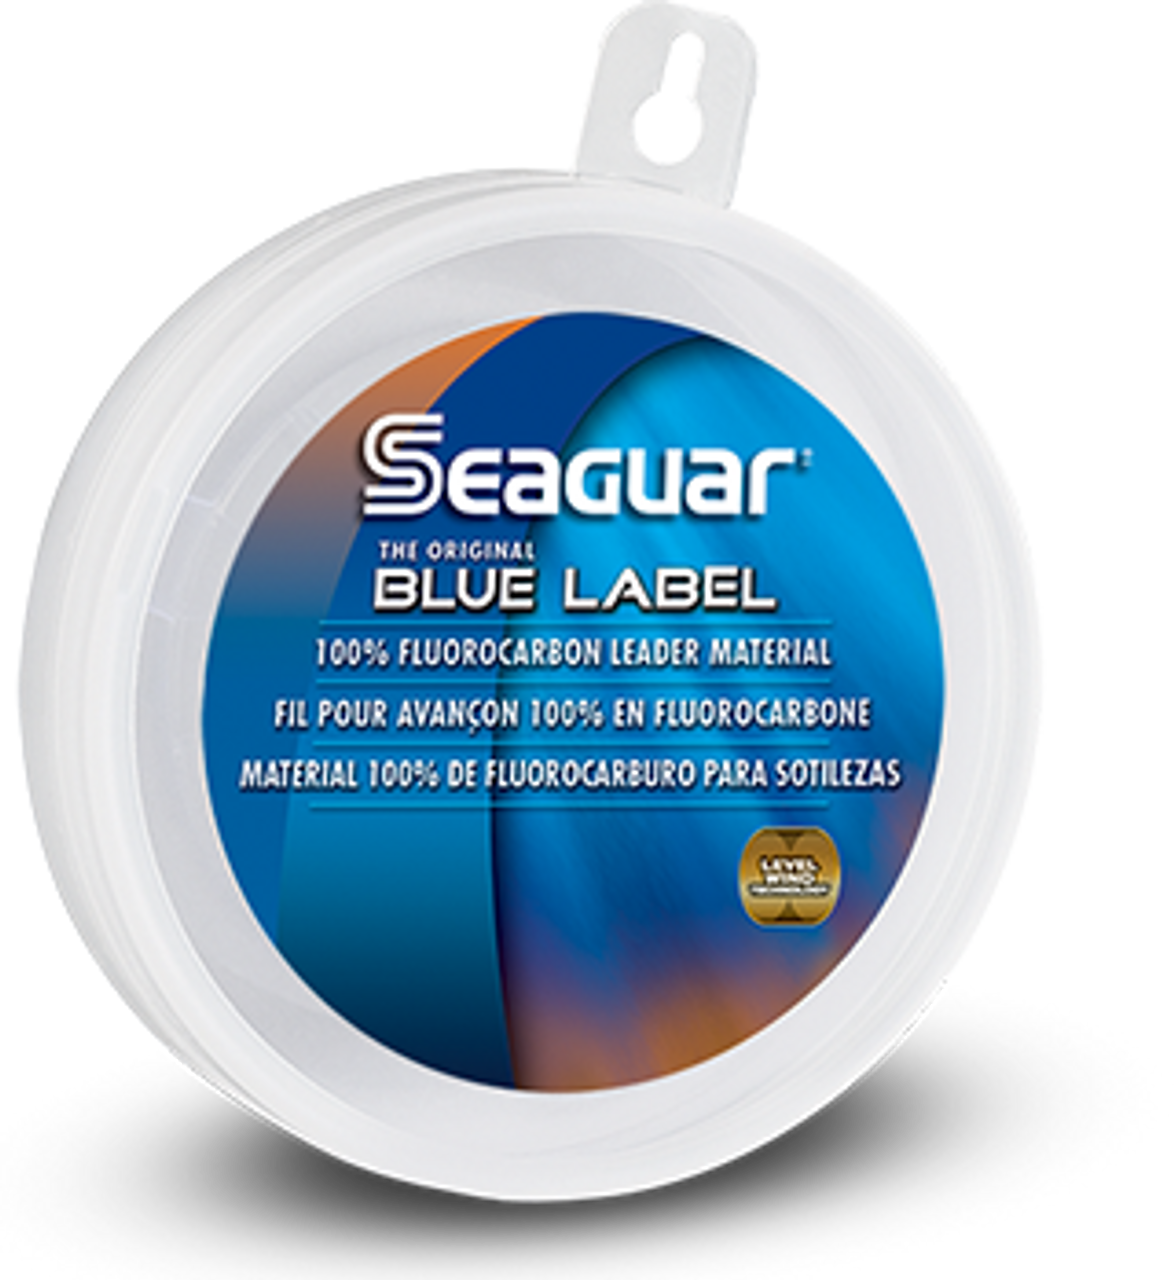 Seaguar Gold Label Fluorocarbon Leader - 2 lb.